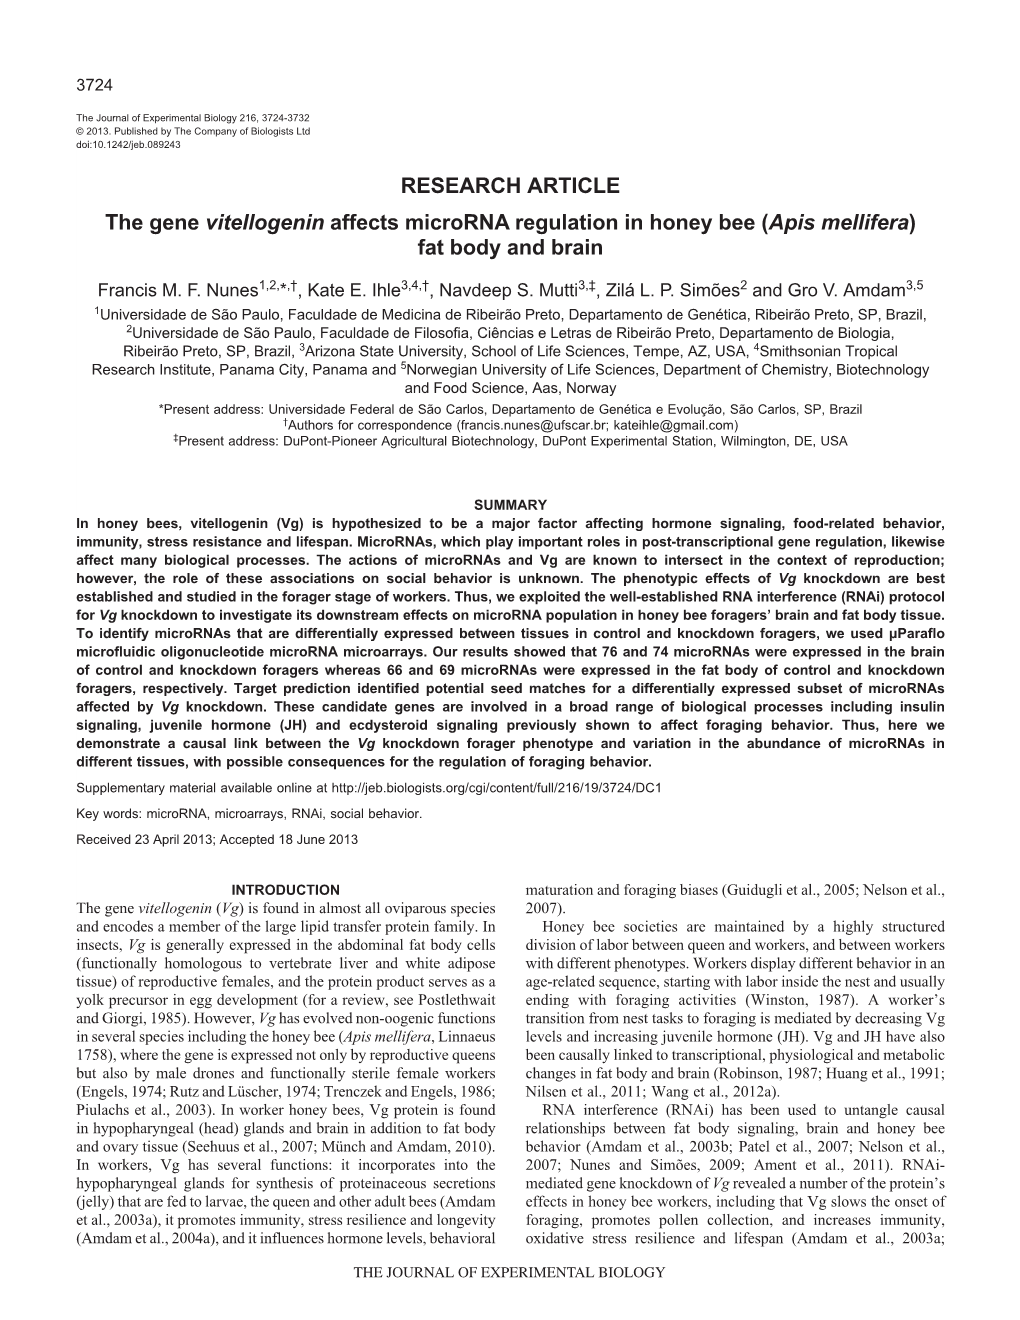 RESEARCH ARTICLE the Gene Vitellogenin Affects Microrna Regulation in Honey Bee (Apis Mellifera) Fat Body and Brain